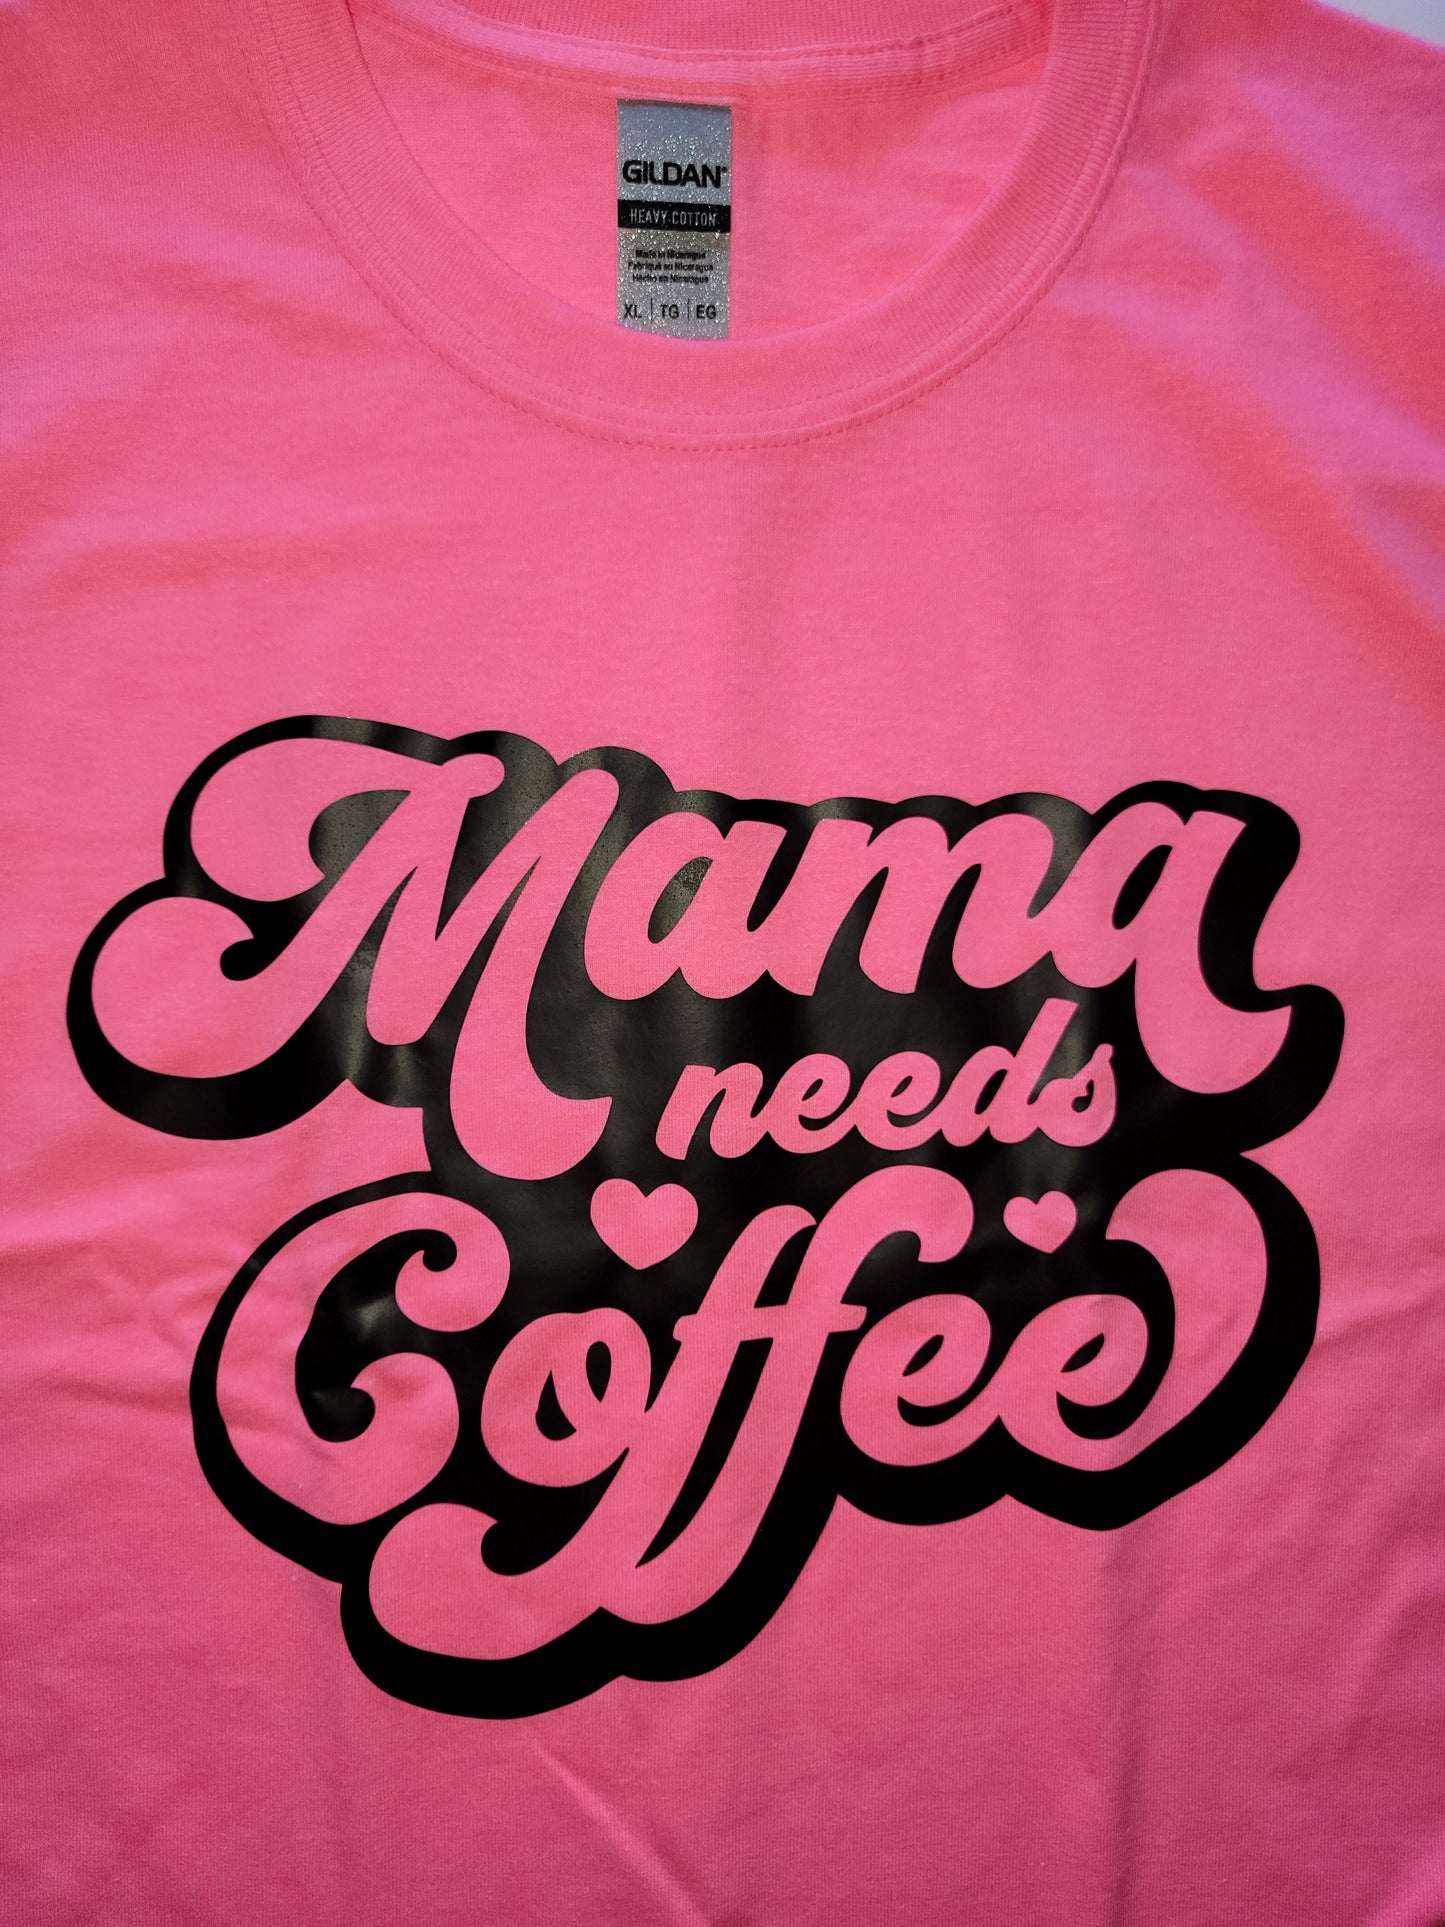 Mama Needs Coffee Custom T-shirt